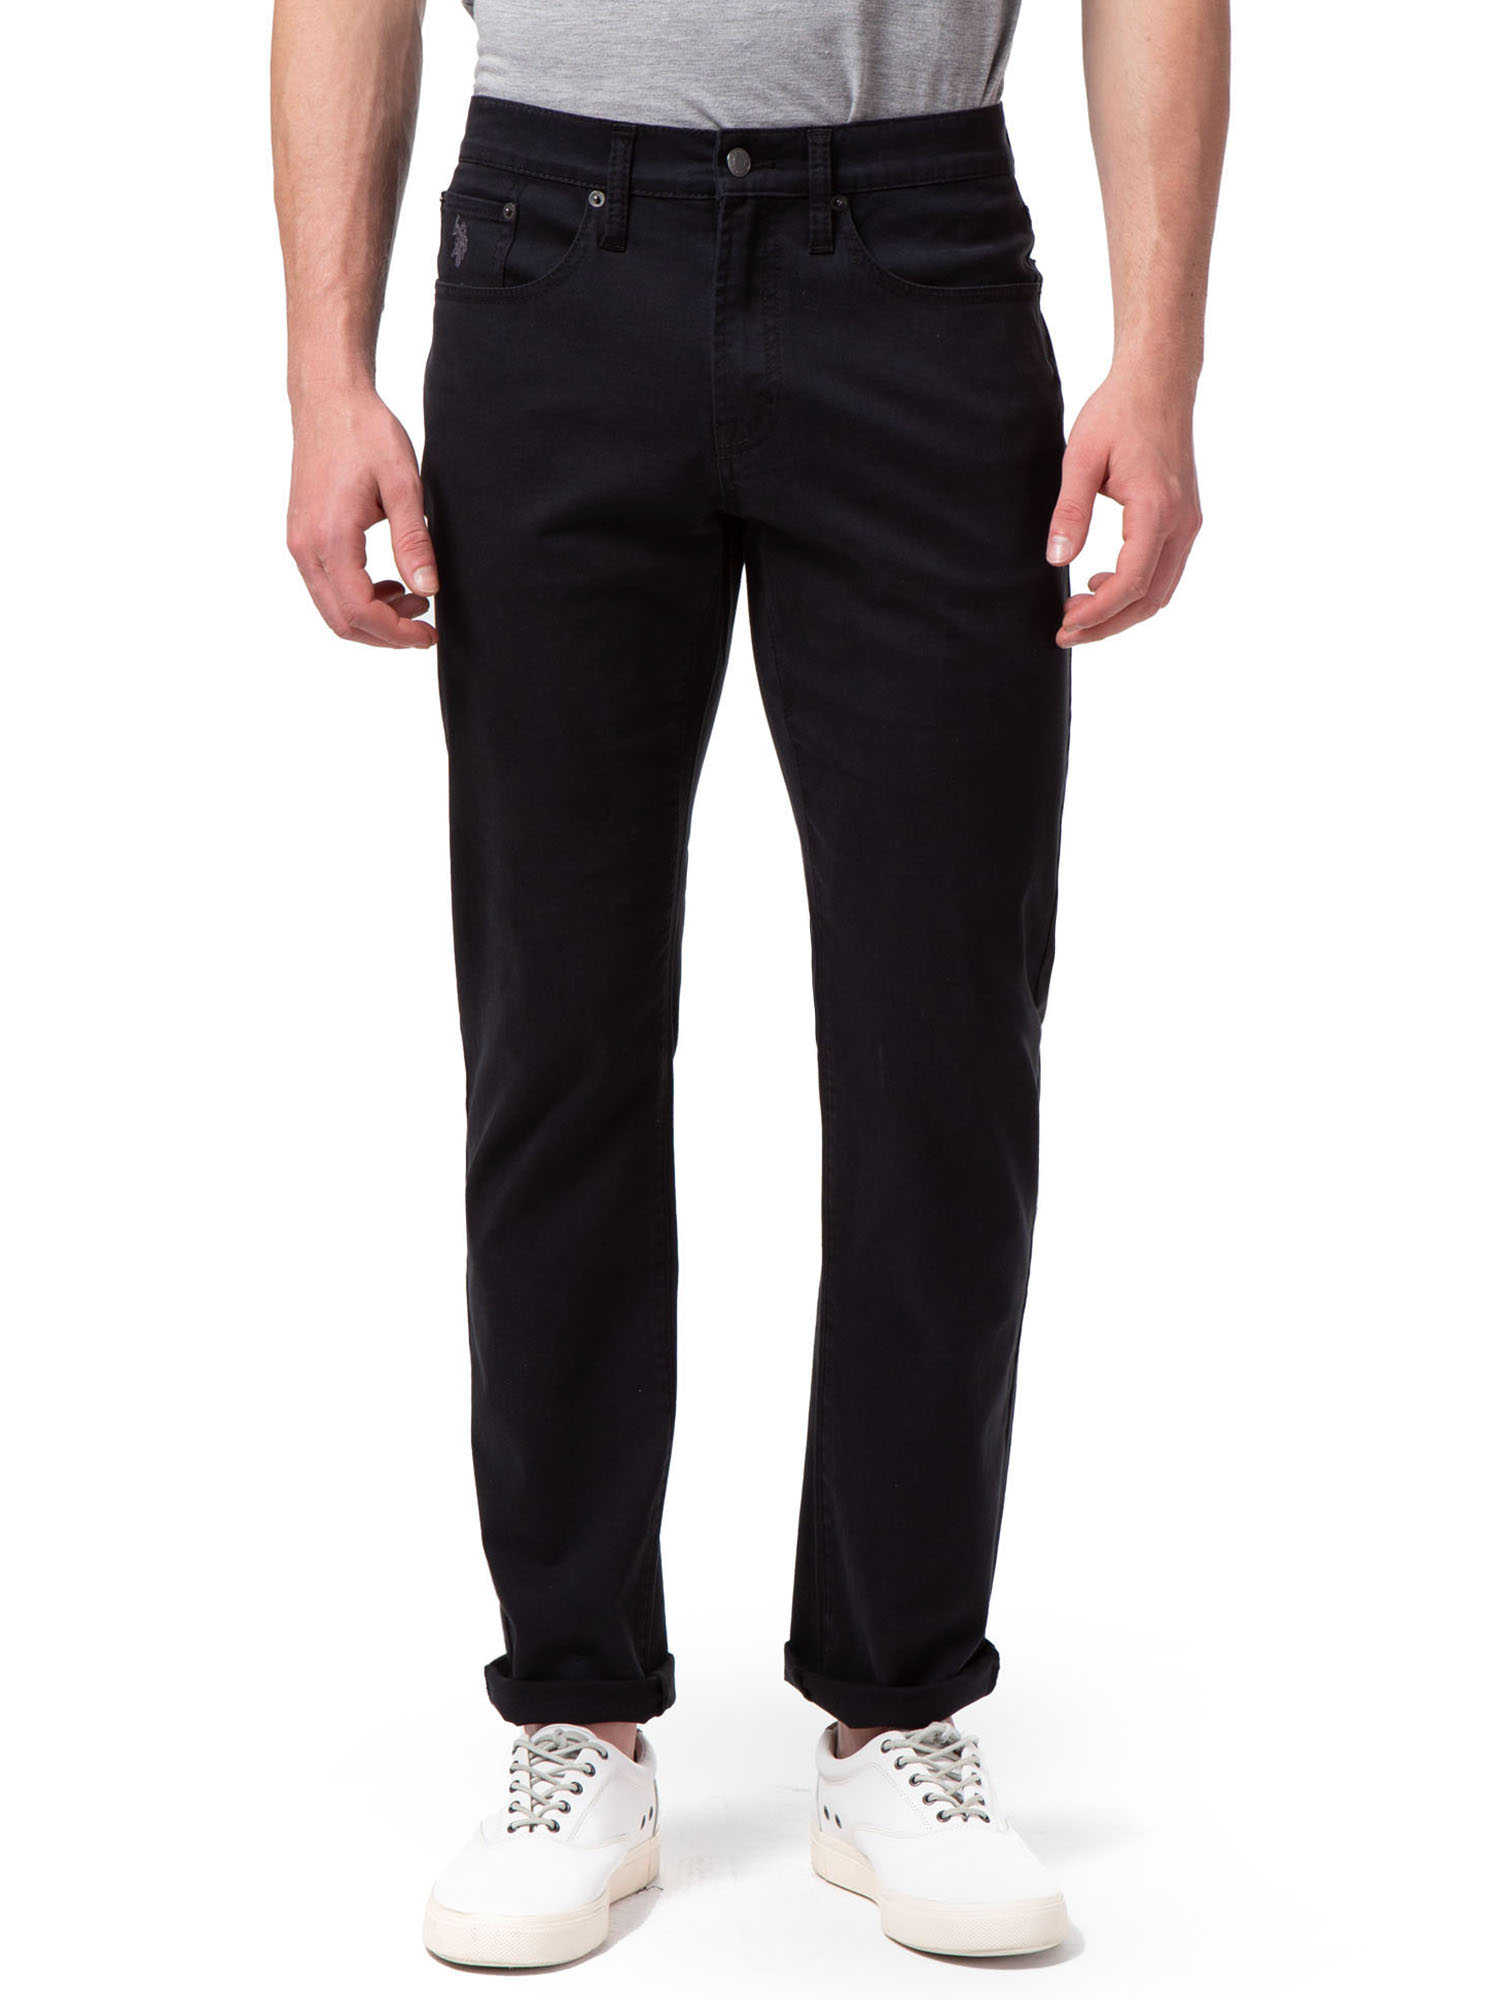 U.S. Polo Assn. Men's Slim Straight Stretch Twill 5 Pocket Pants - image 3 of 4